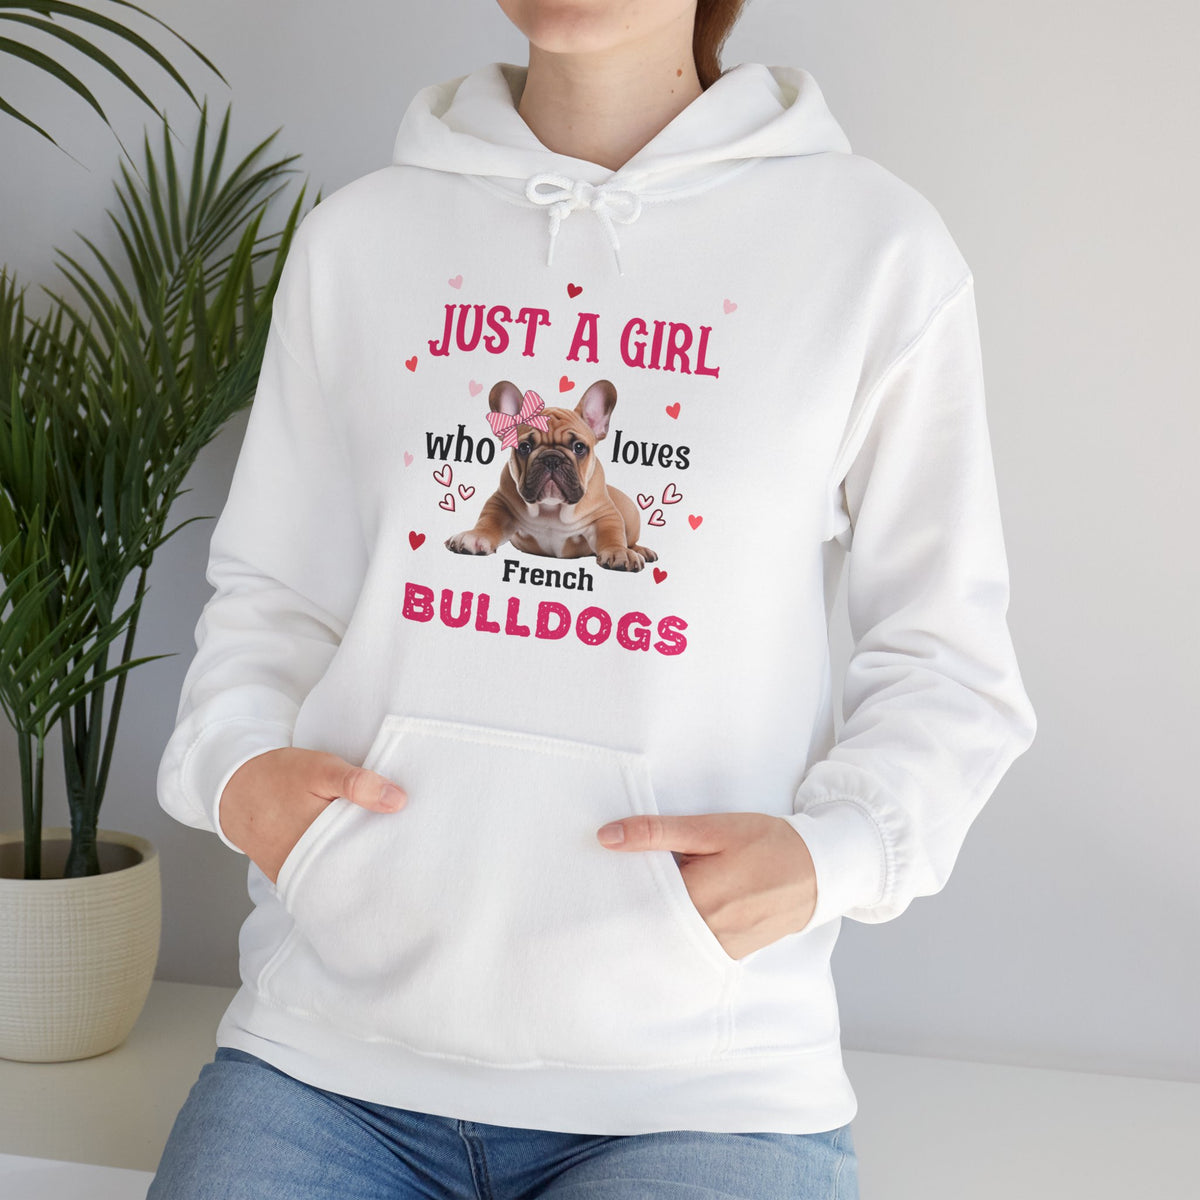 French Bulldog Hoodies / French Bulldog Dog Hoodies